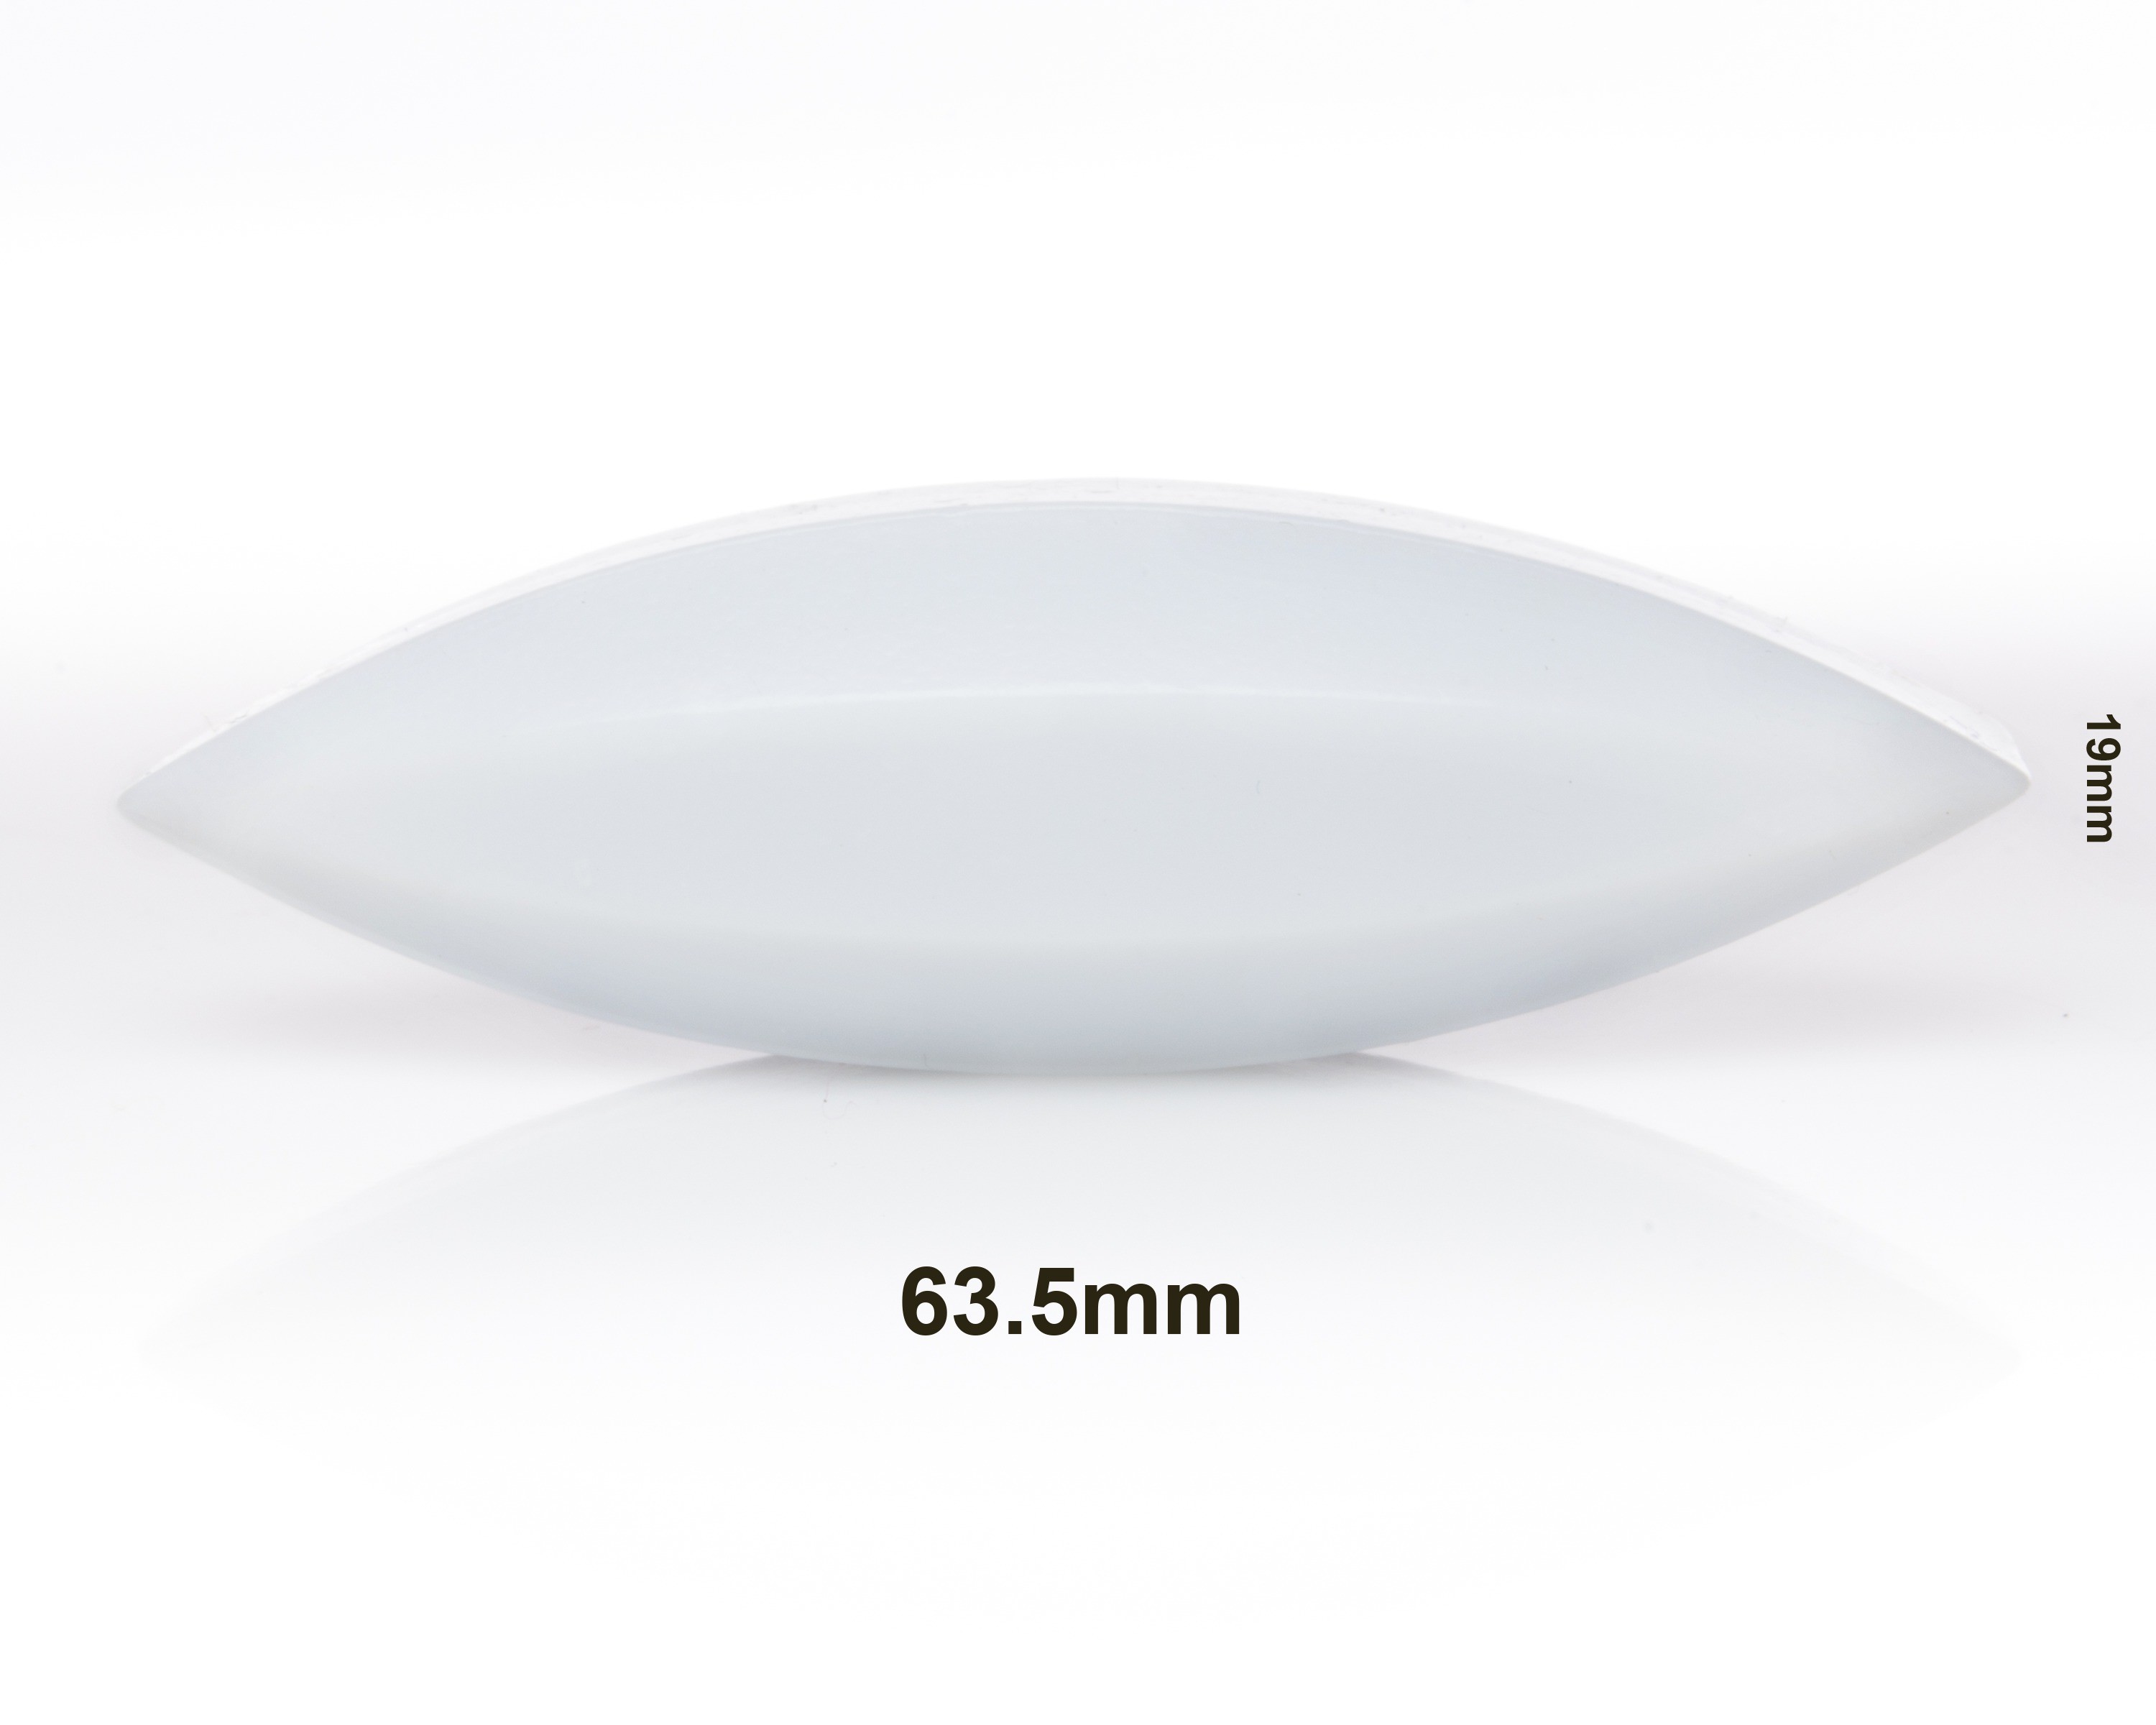 SP Bel-Art Spinbar Teflon Elliptical (Egg-Shaped) Magnetic Stirring Bar; 63.5 x 19mm, White